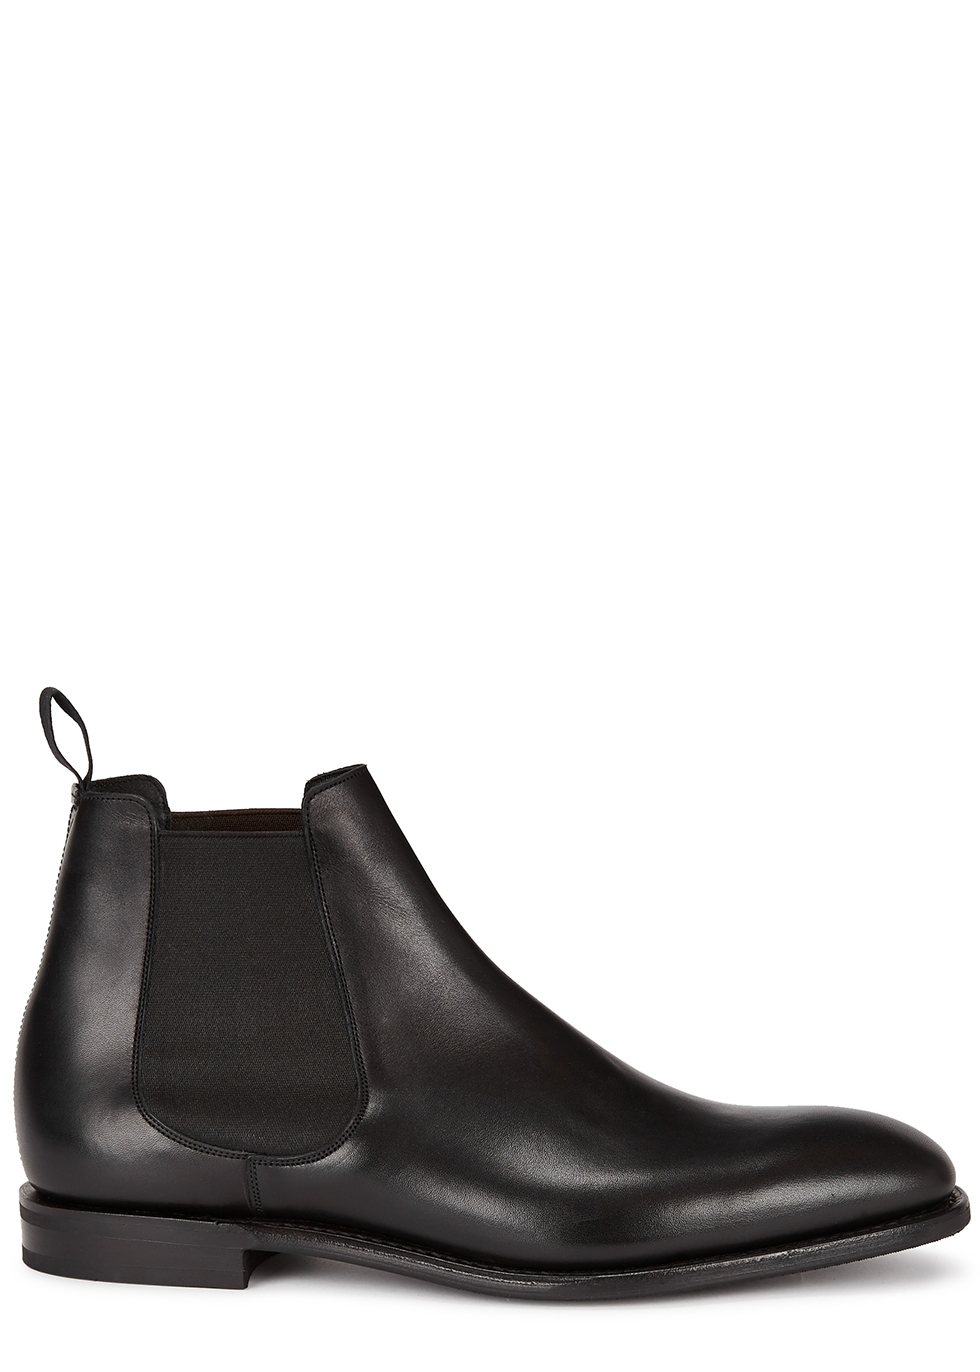 Church's Prenton black leather Chelsea boots - Harvey Nichols